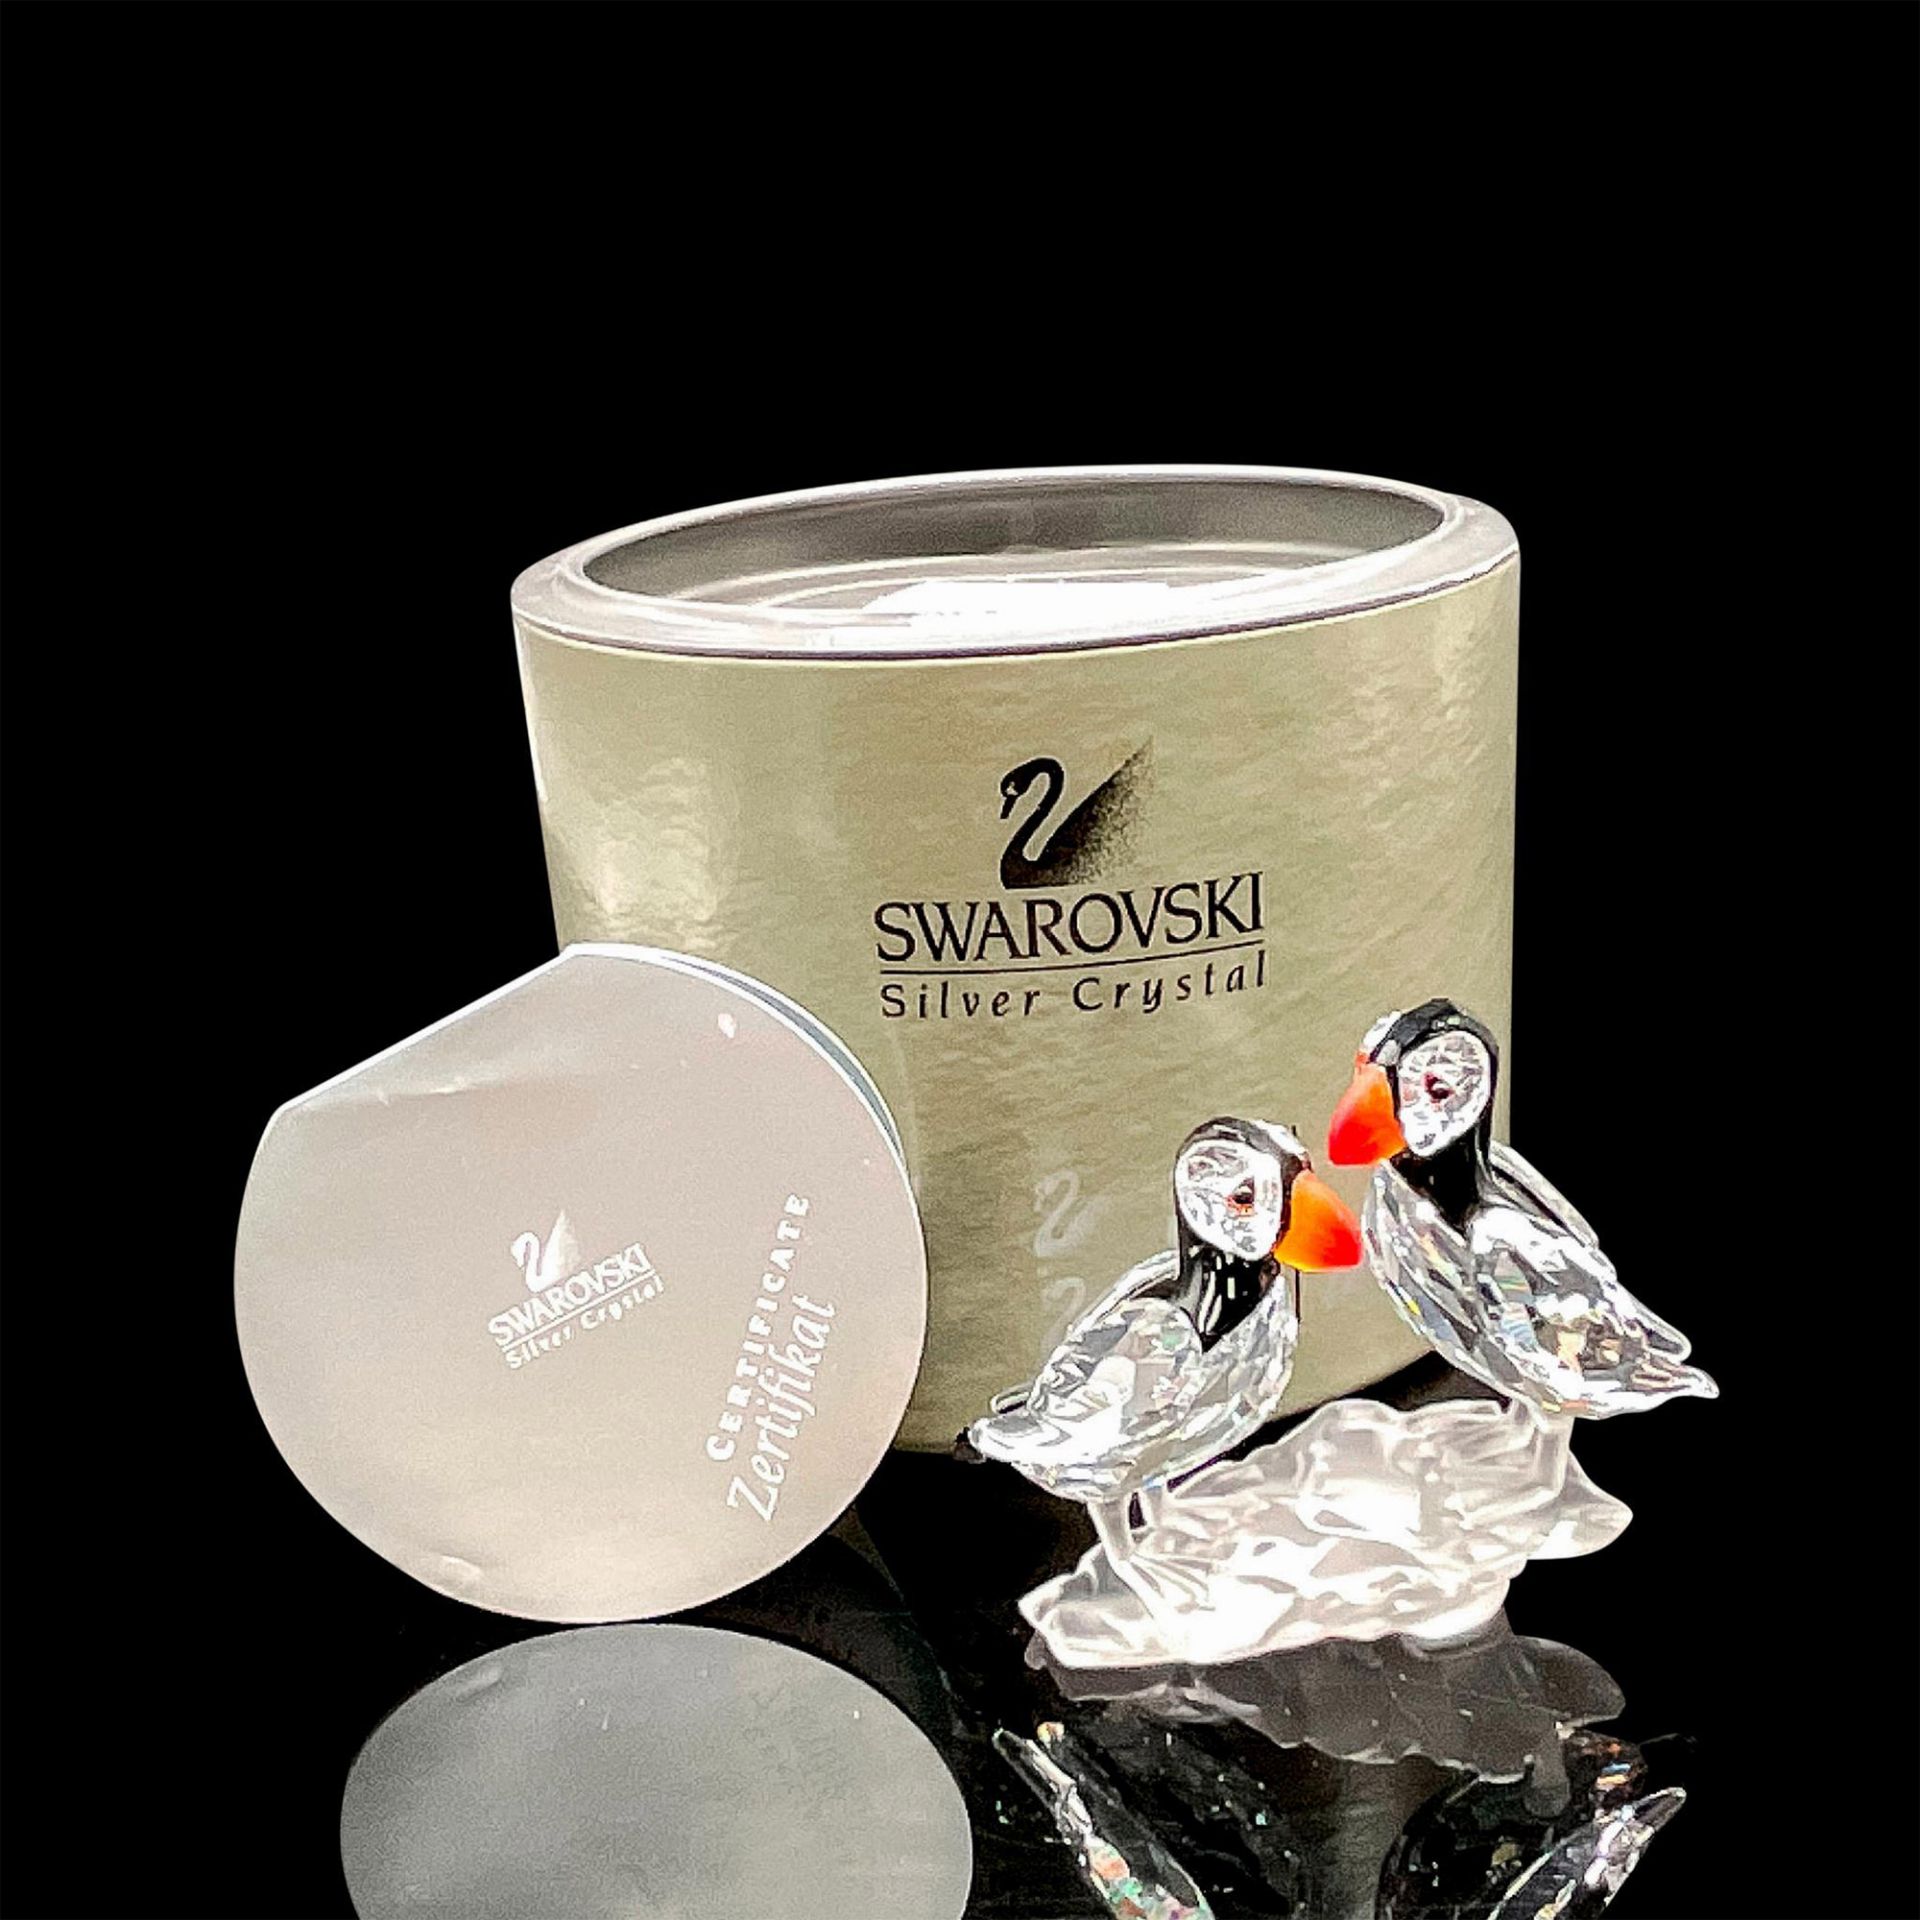 Swarovski Silver Crystal Figurine, Puffins - Image 4 of 4